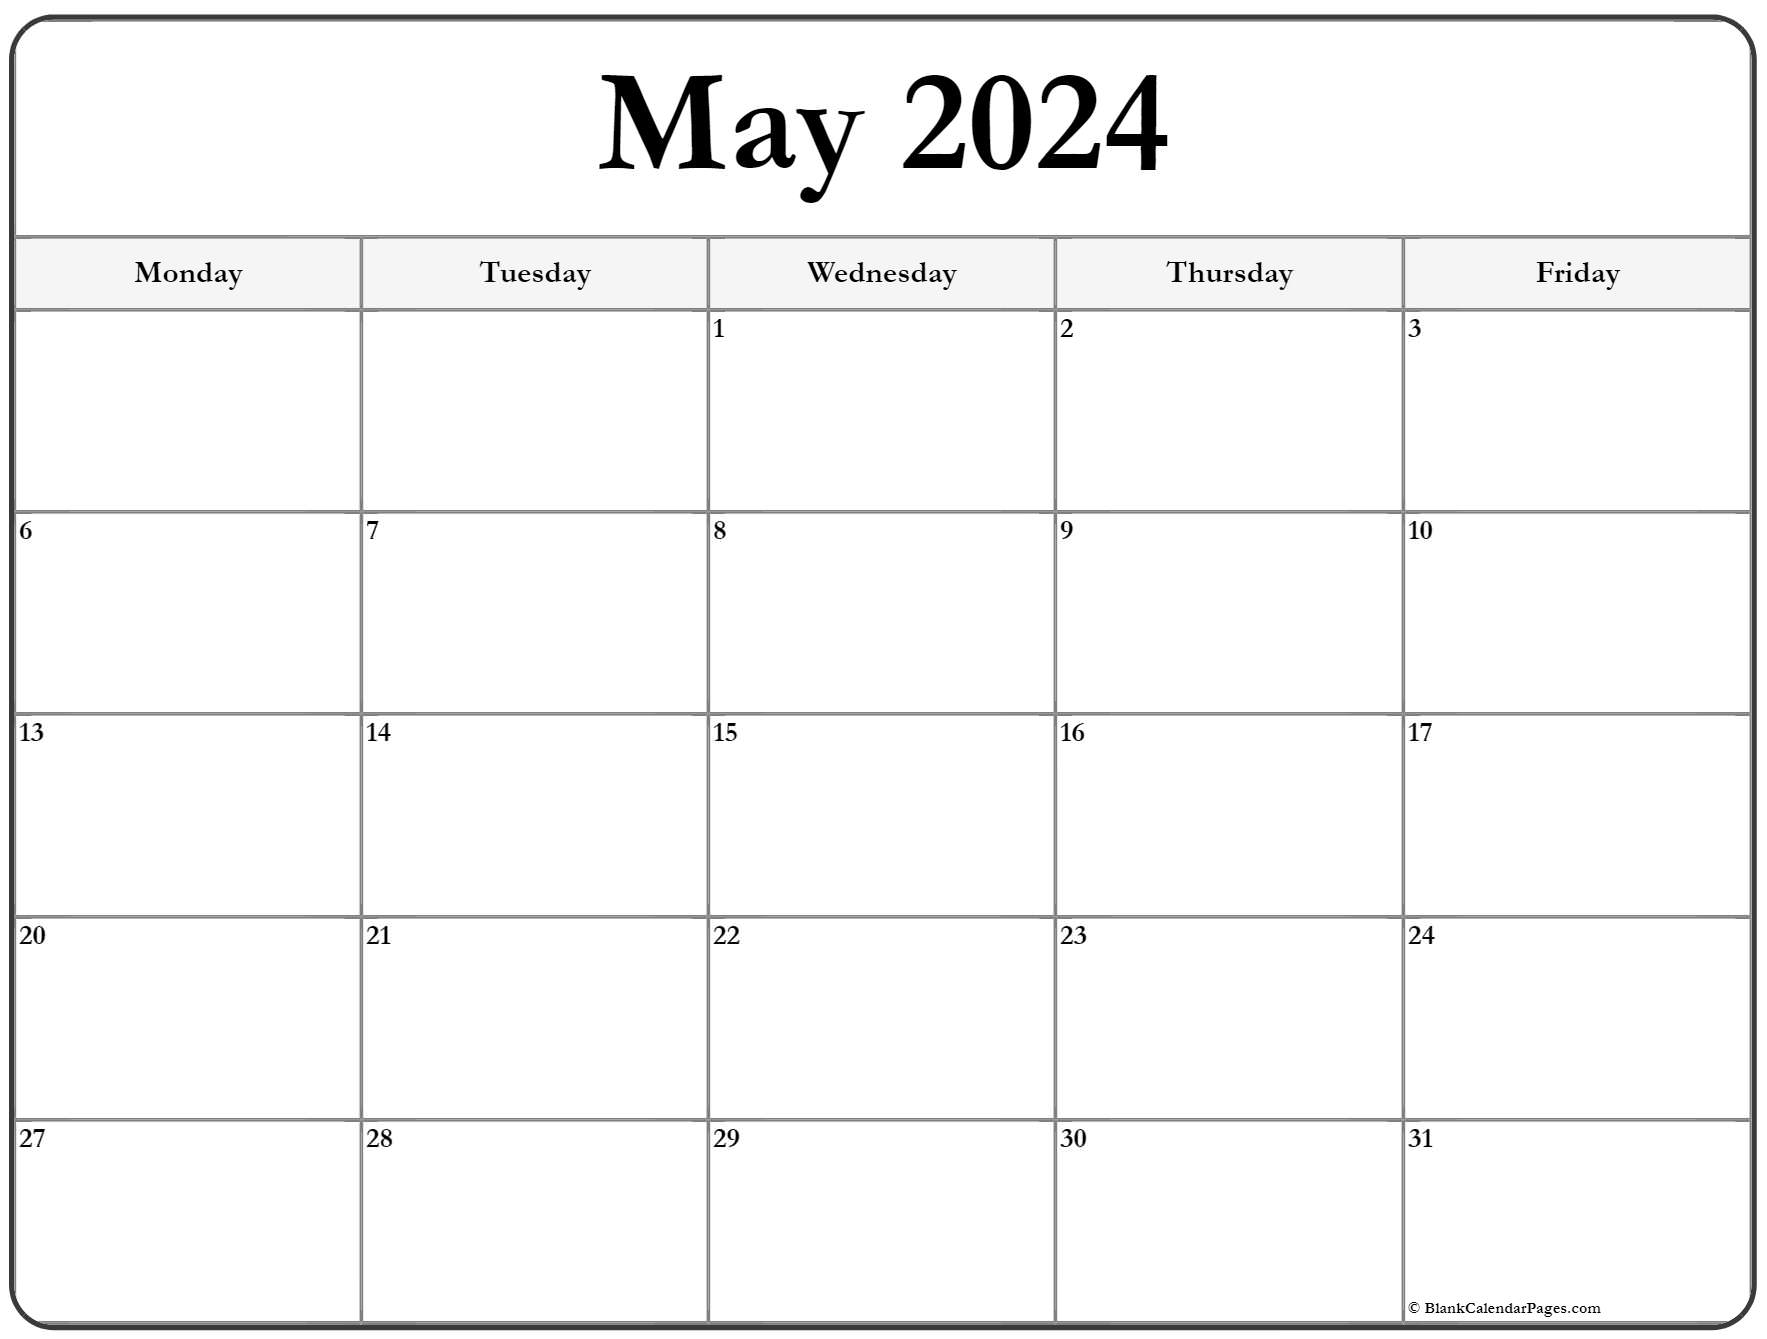 May 2021 Monday Calendar | Monday to Sunday